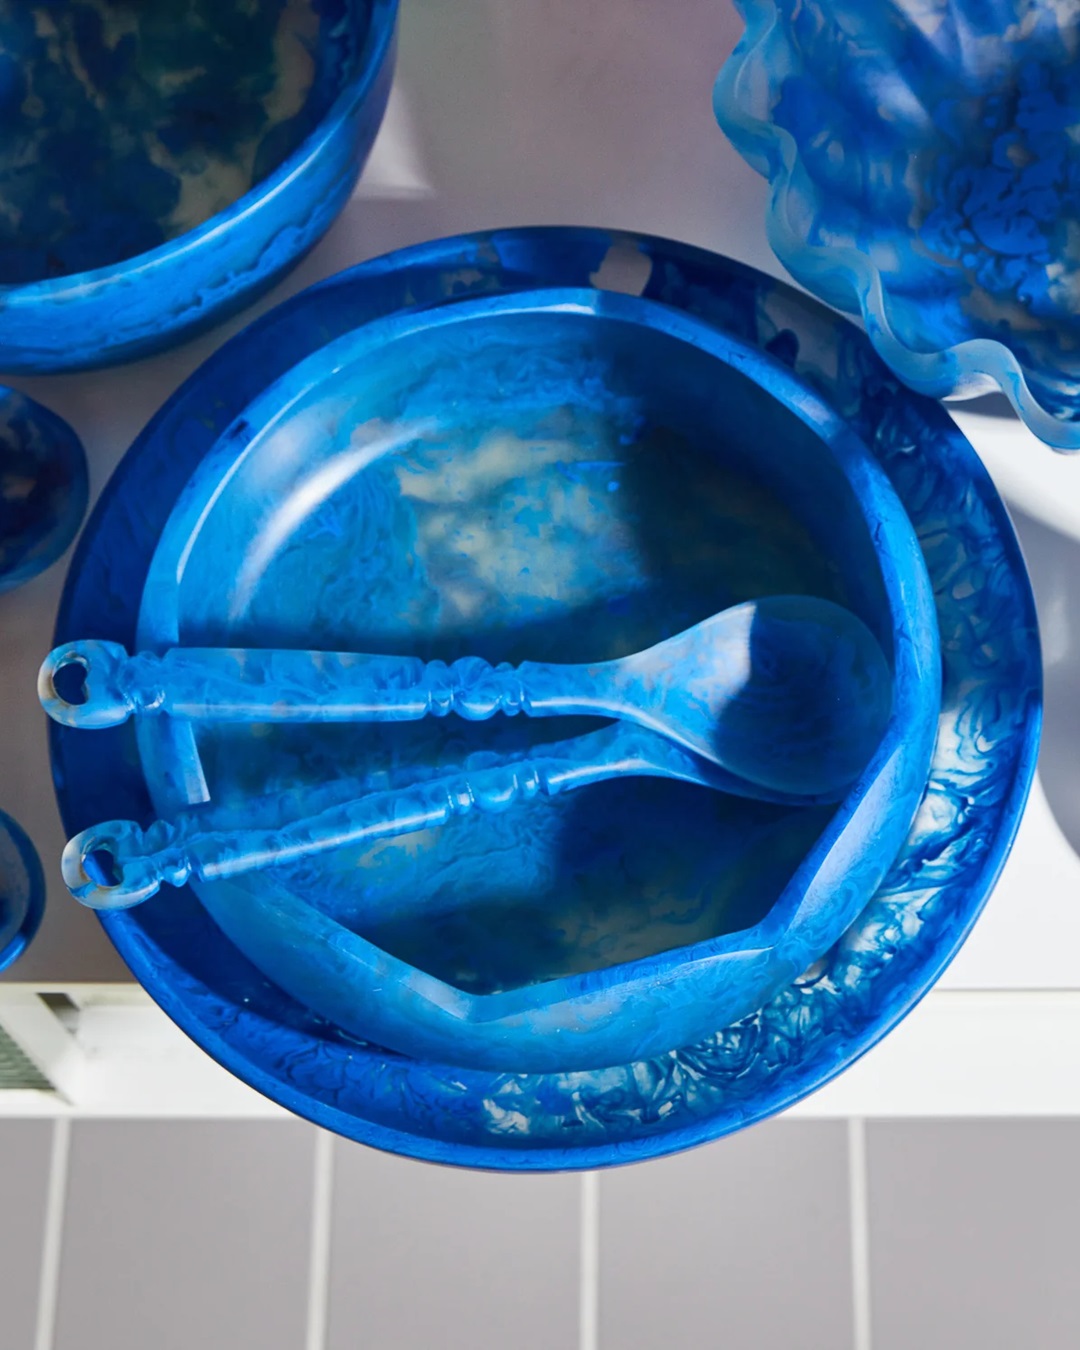 Blue resin salad servers in bowls